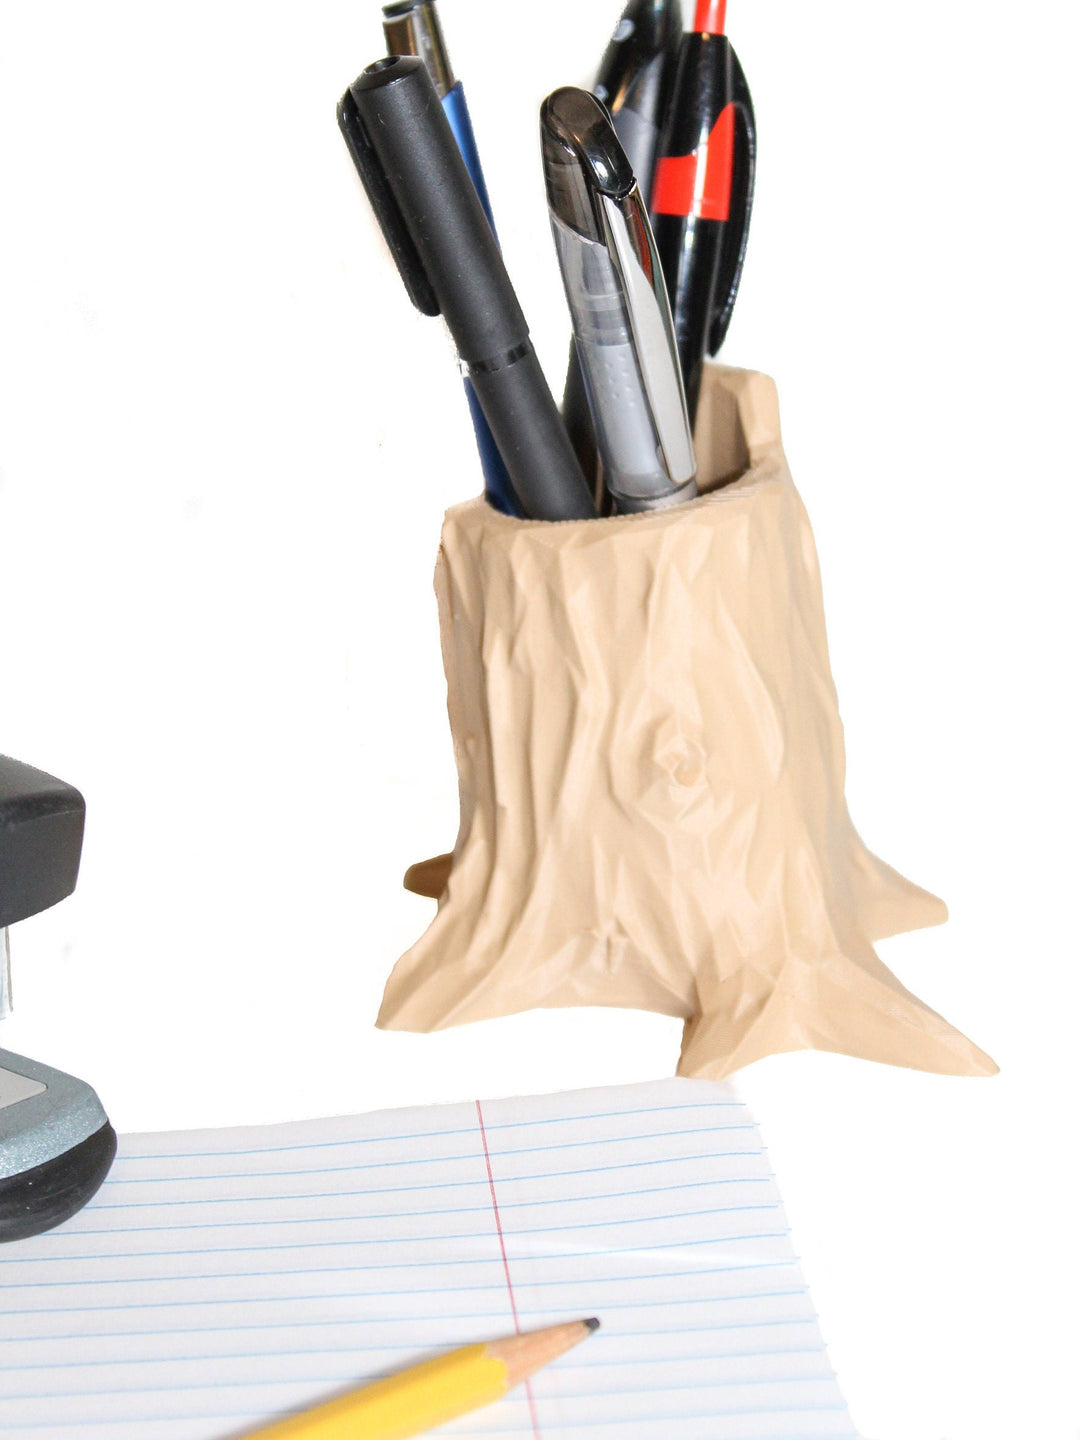 Tree Stump Pen Holder for Office, School Desk Organization